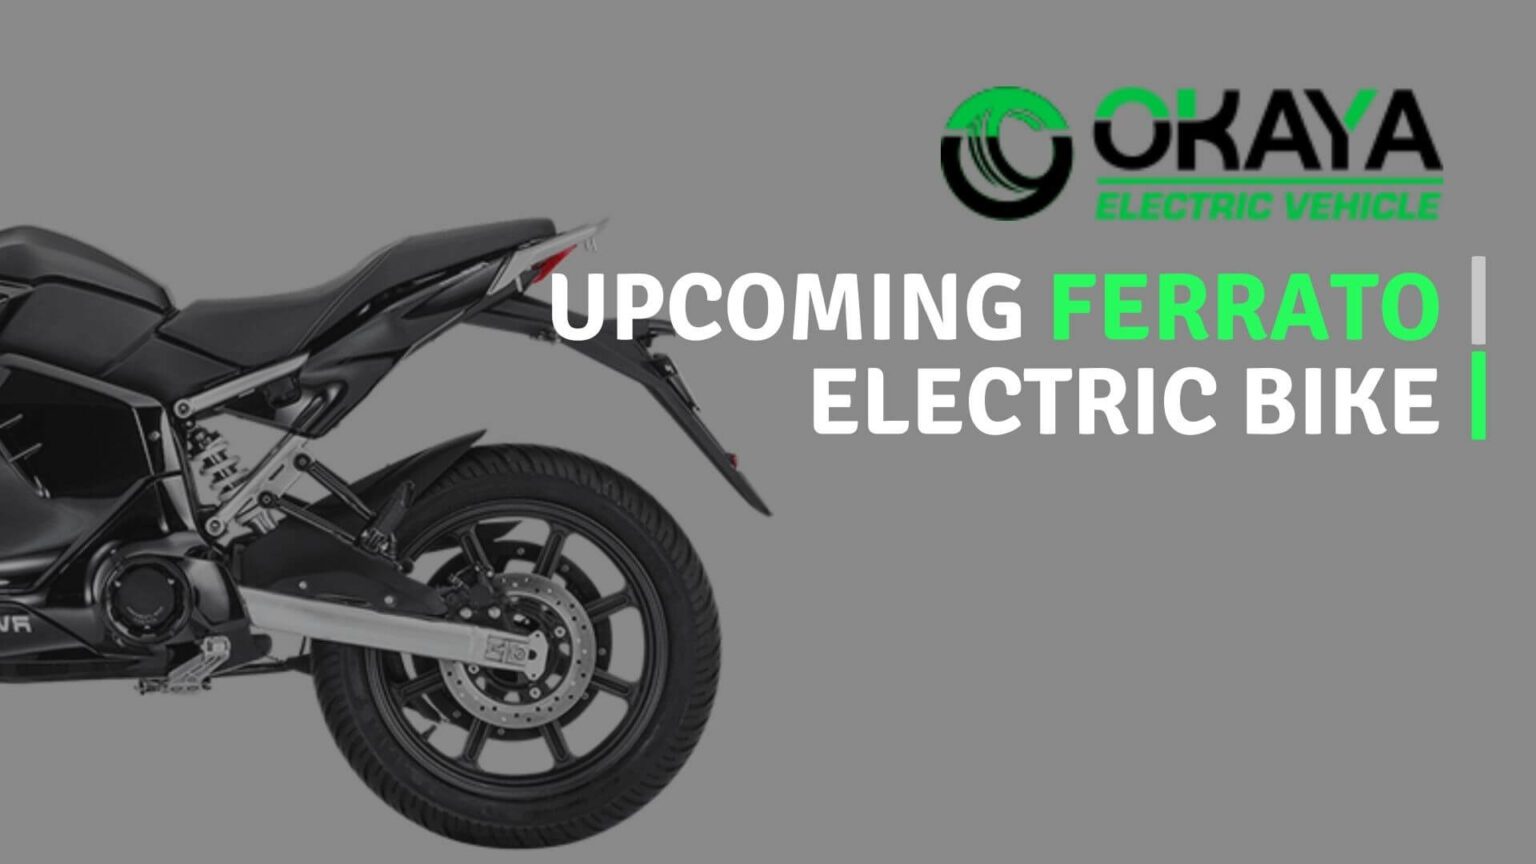 okaya up ing ferrato electric bike